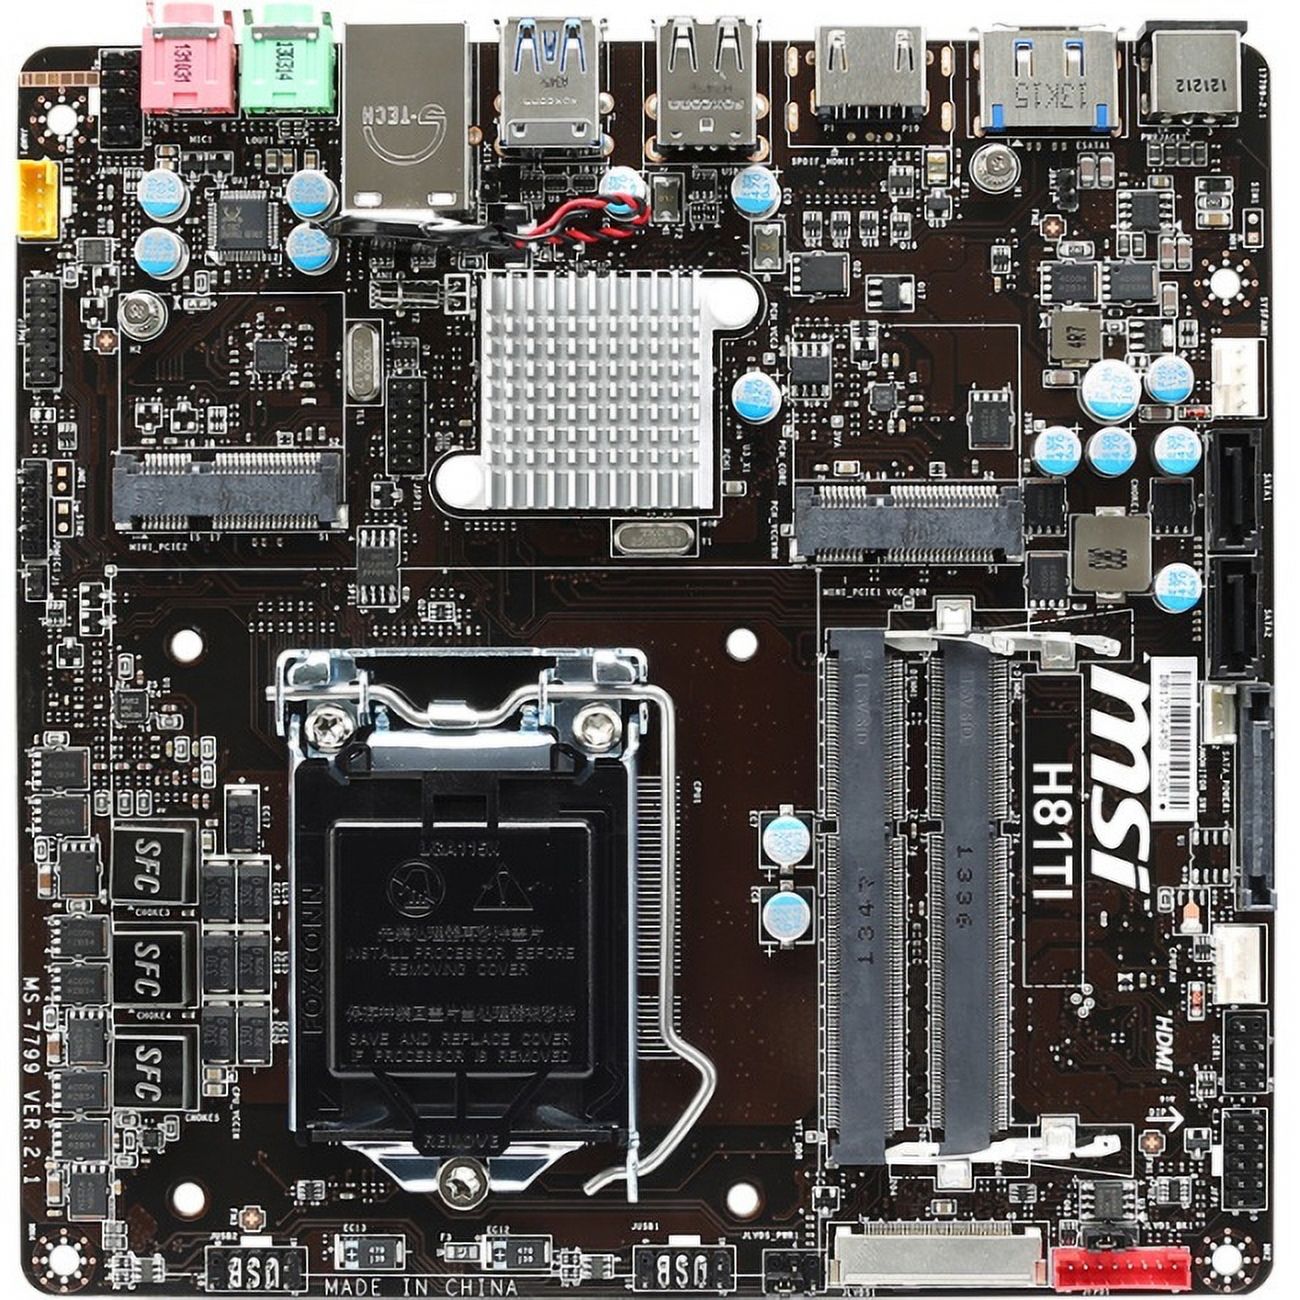 MSI H81TI - Motherboard - mini ITX - LGA1150 Socket - H81 Chipset - USB 3.0 - Gigabit LAN - onboard graphics (CPU required) - 8-channel audio - image 2 of 2